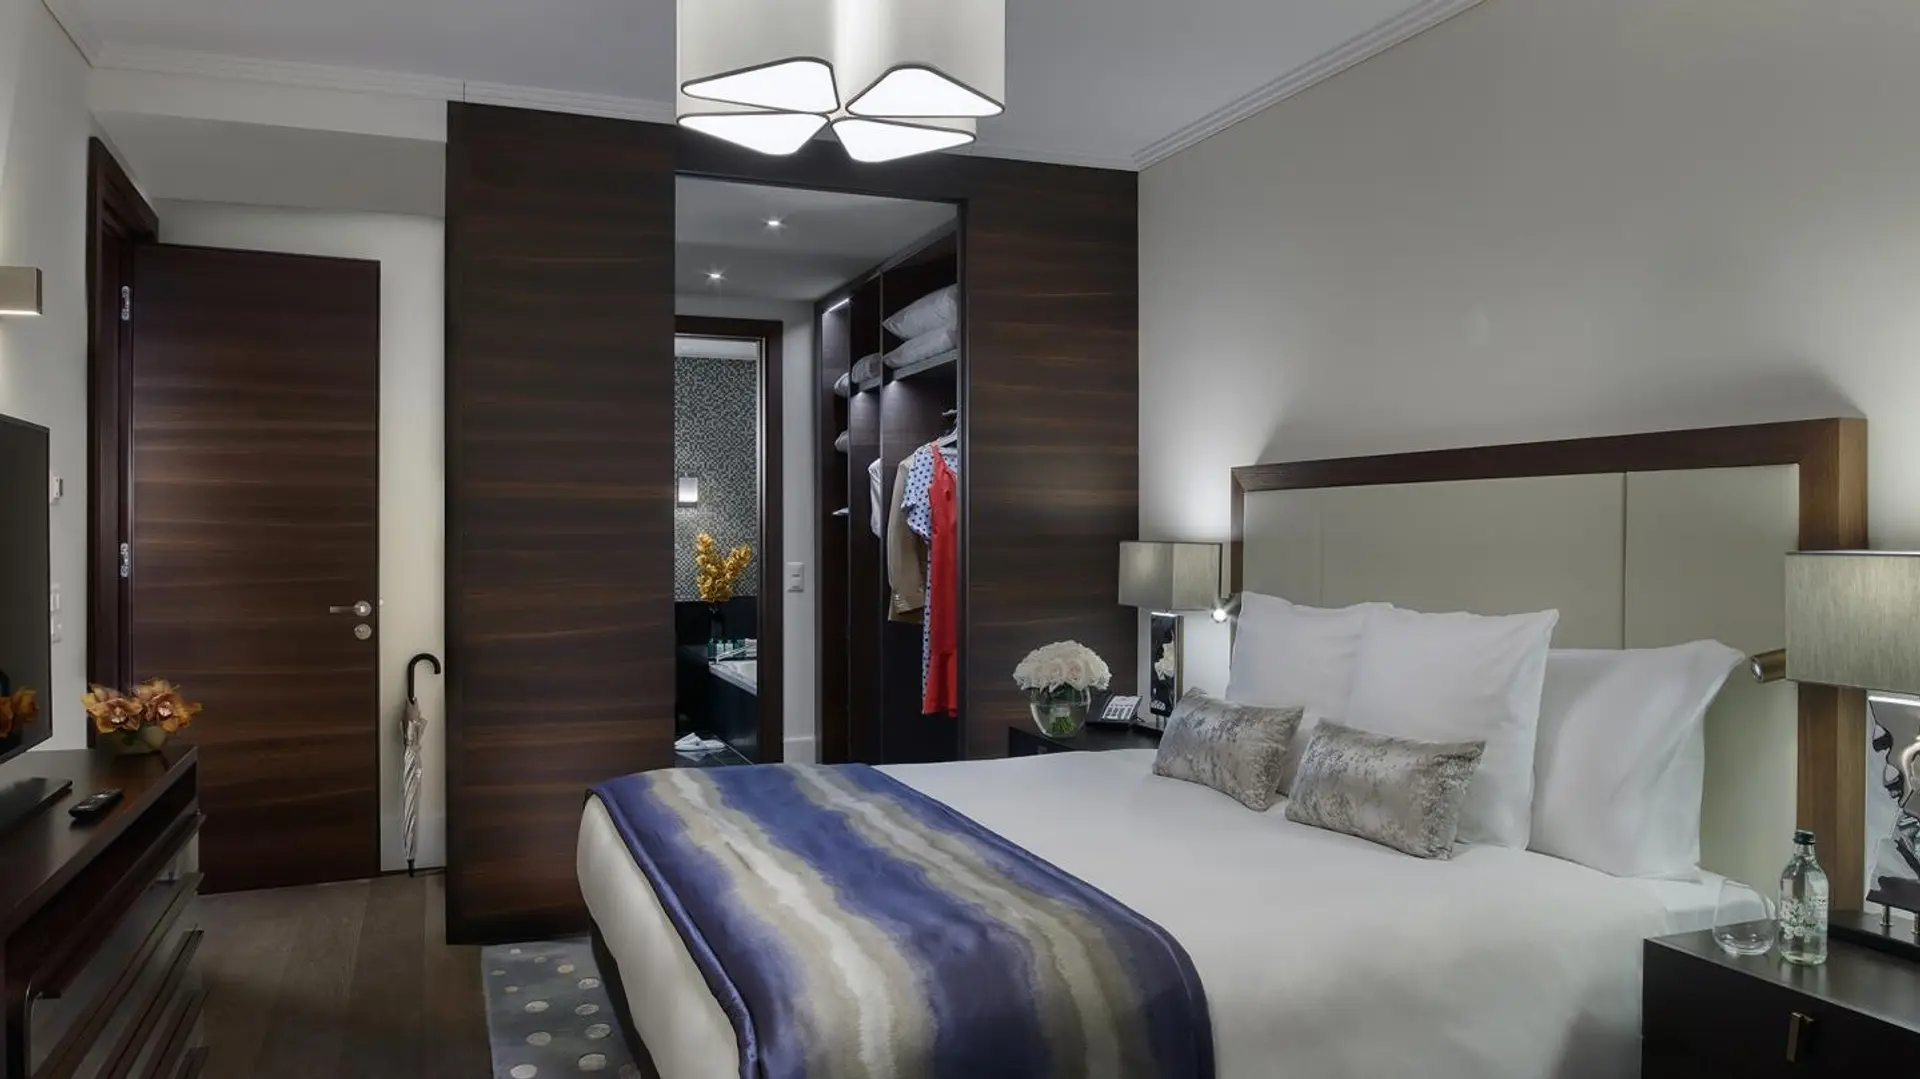 Hotel review Accommodation' - Bürgenstock Hotels & Resort - 0